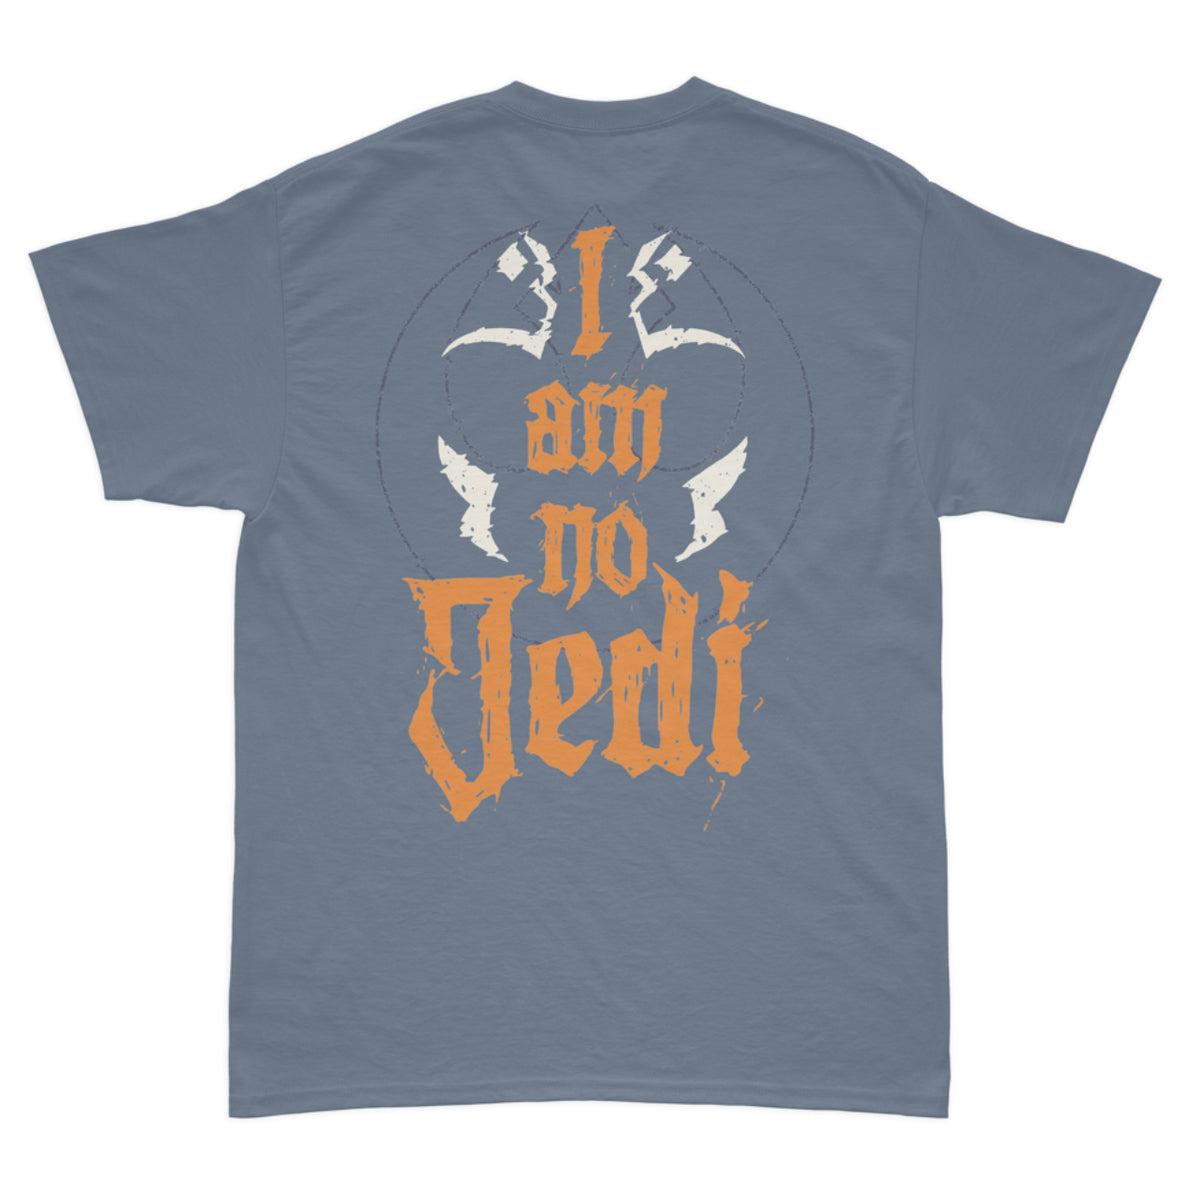 I Am No Jedi Tee